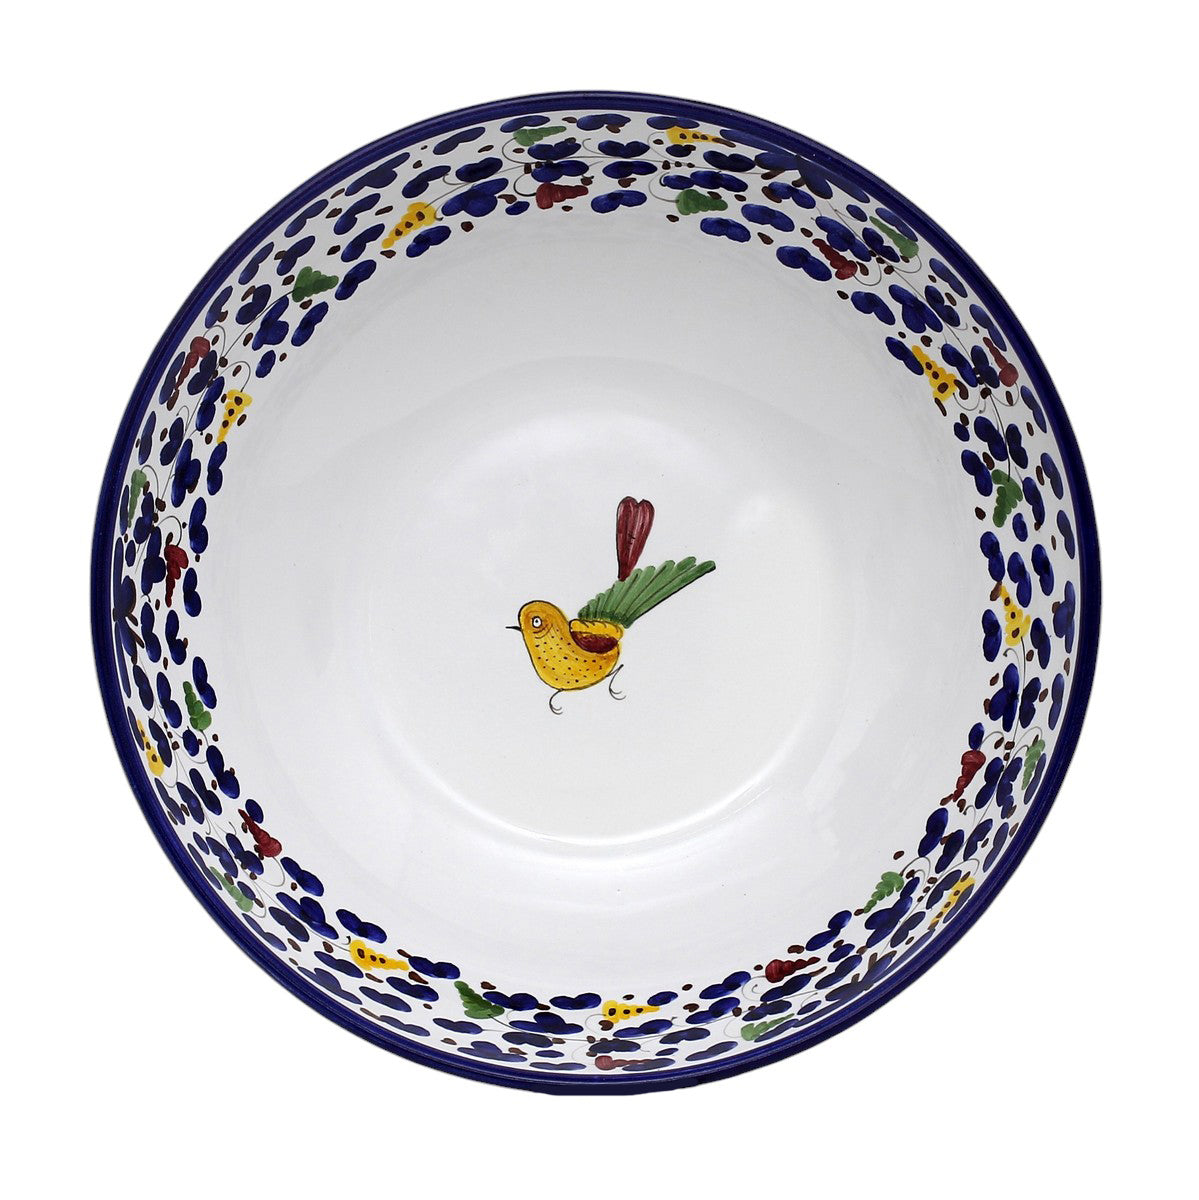 ARABESCO BLUE DERUTA: Serving Coupe Salad/Pasta Bowl